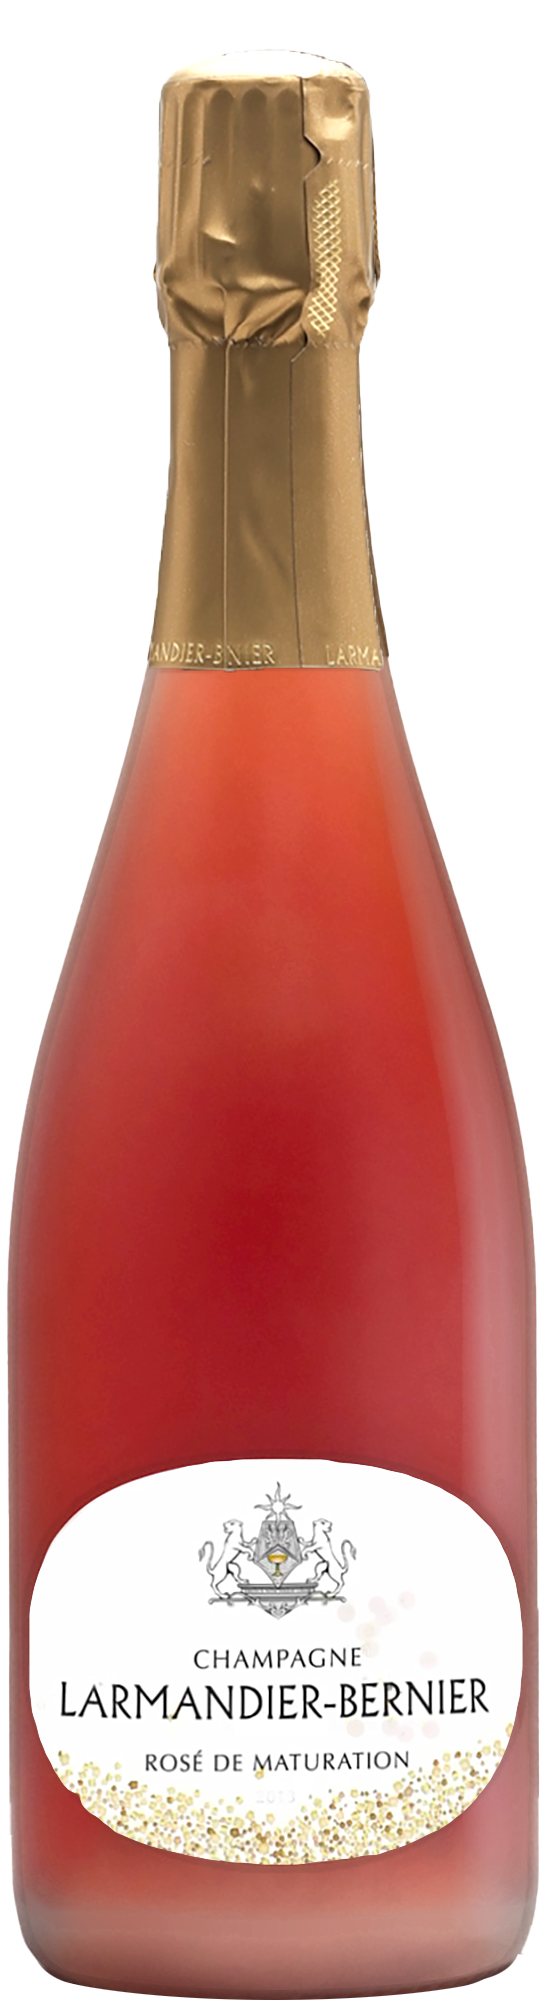 Champagne Larmandier-Bernier 1er Cru Rosé de Maturation 2013 (Disg. Jun 2018)